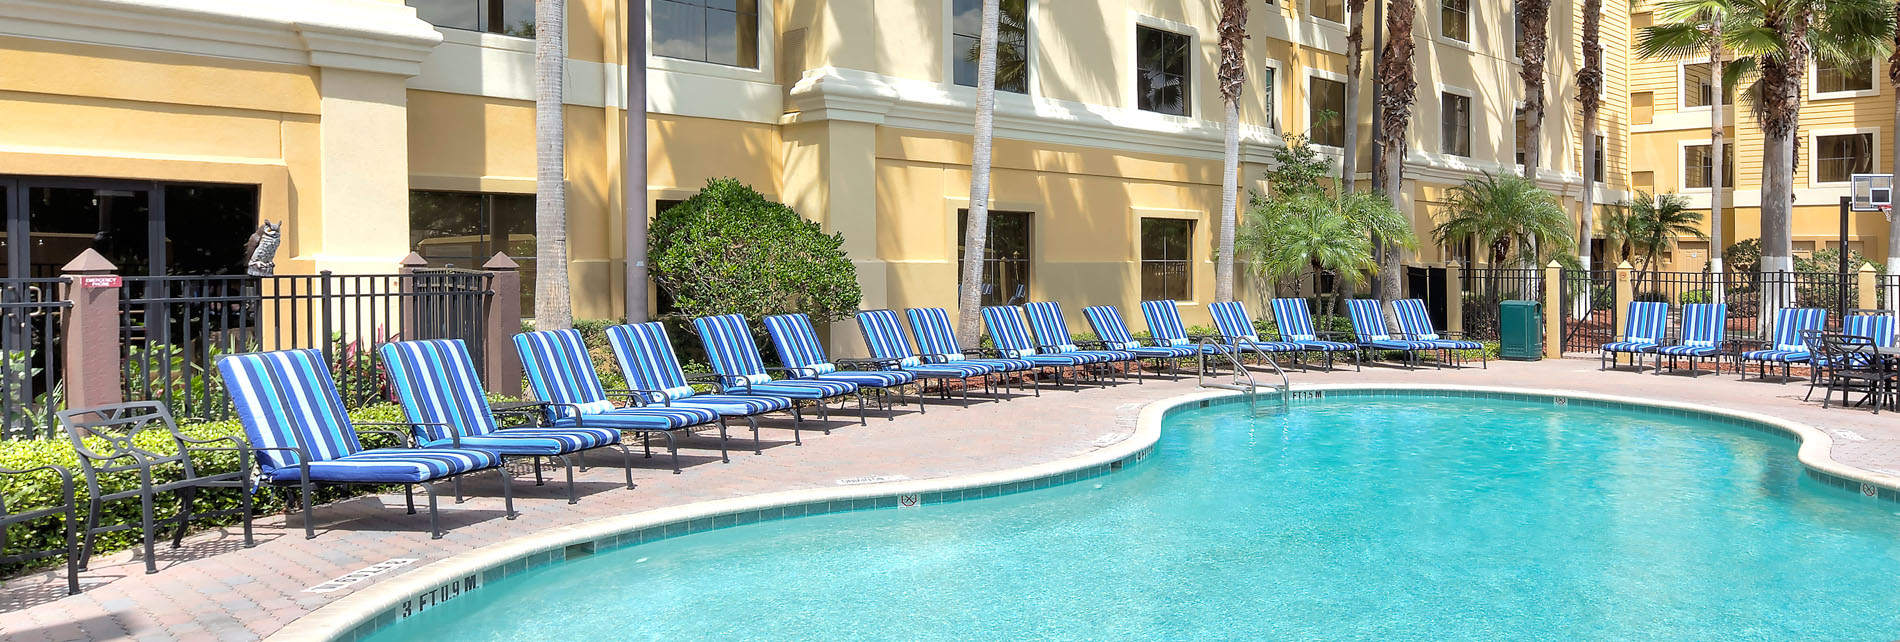 Star Banner - staysky suites I-Drive Orlando